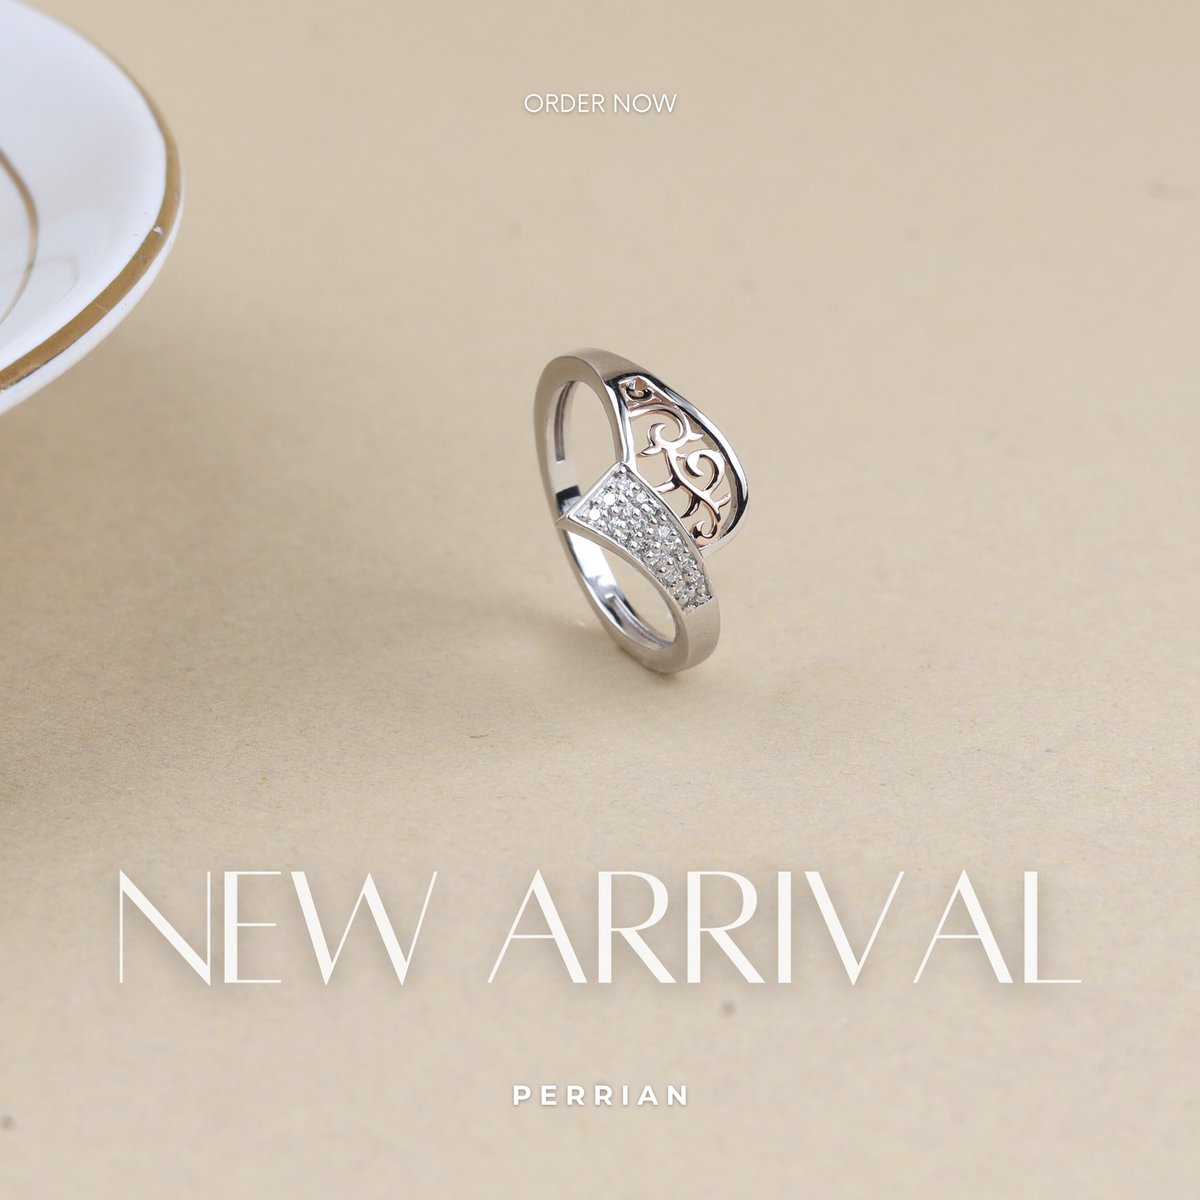 Vintage Natural Diamond Engagement Ring
perrian.com/jewellery/rings
#perrian